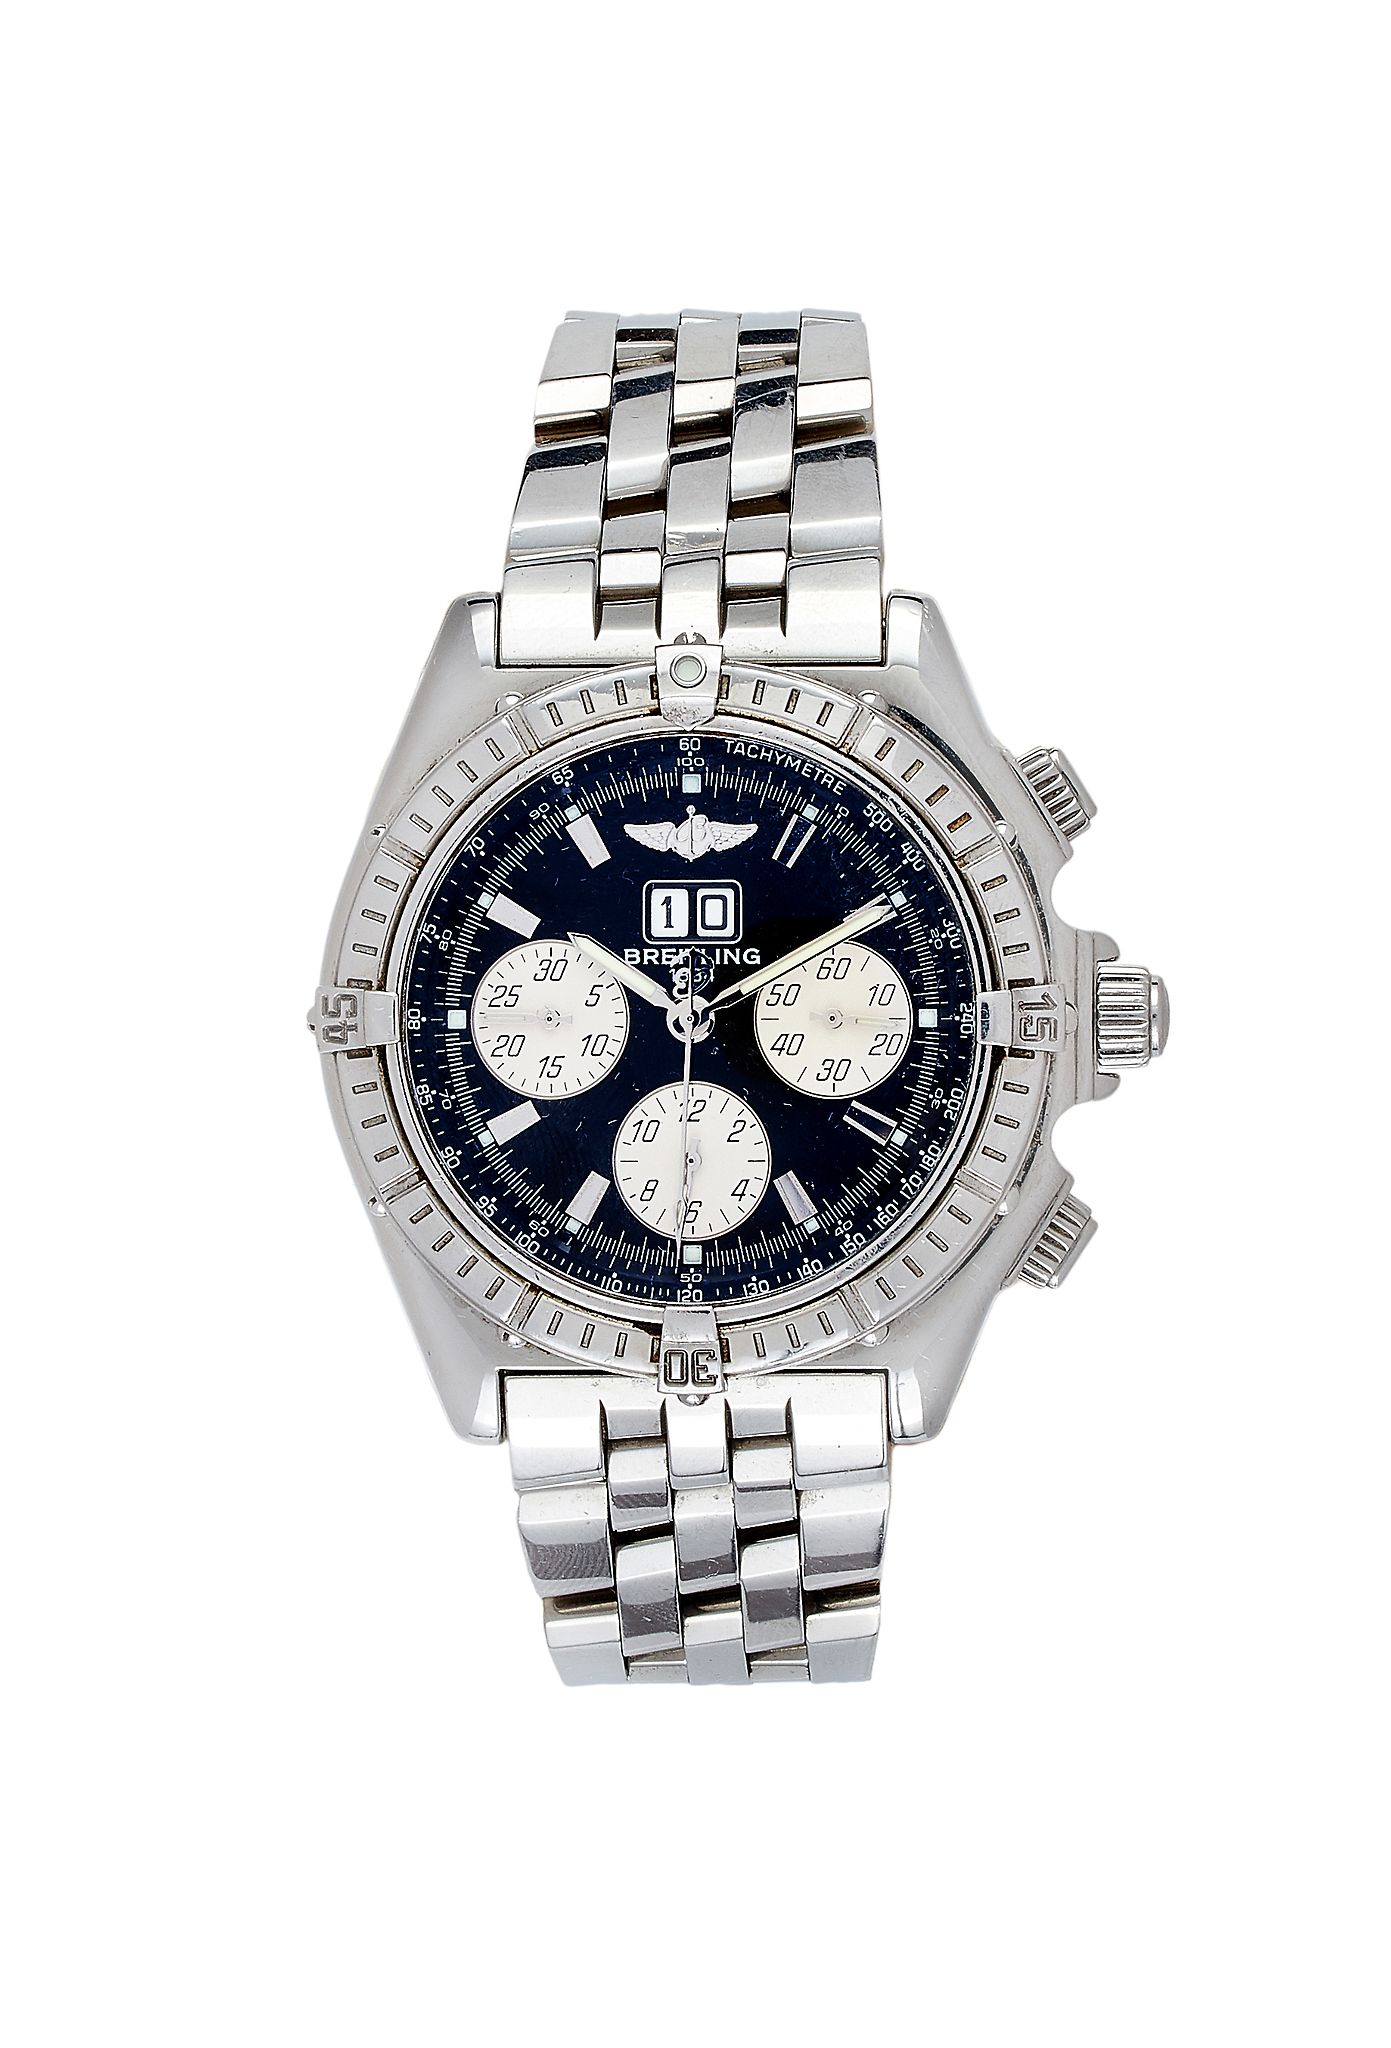 Breitling, Crosswind Special, ref. A44355, a stainless steel bracelet wristwatch, no. 729593, circa